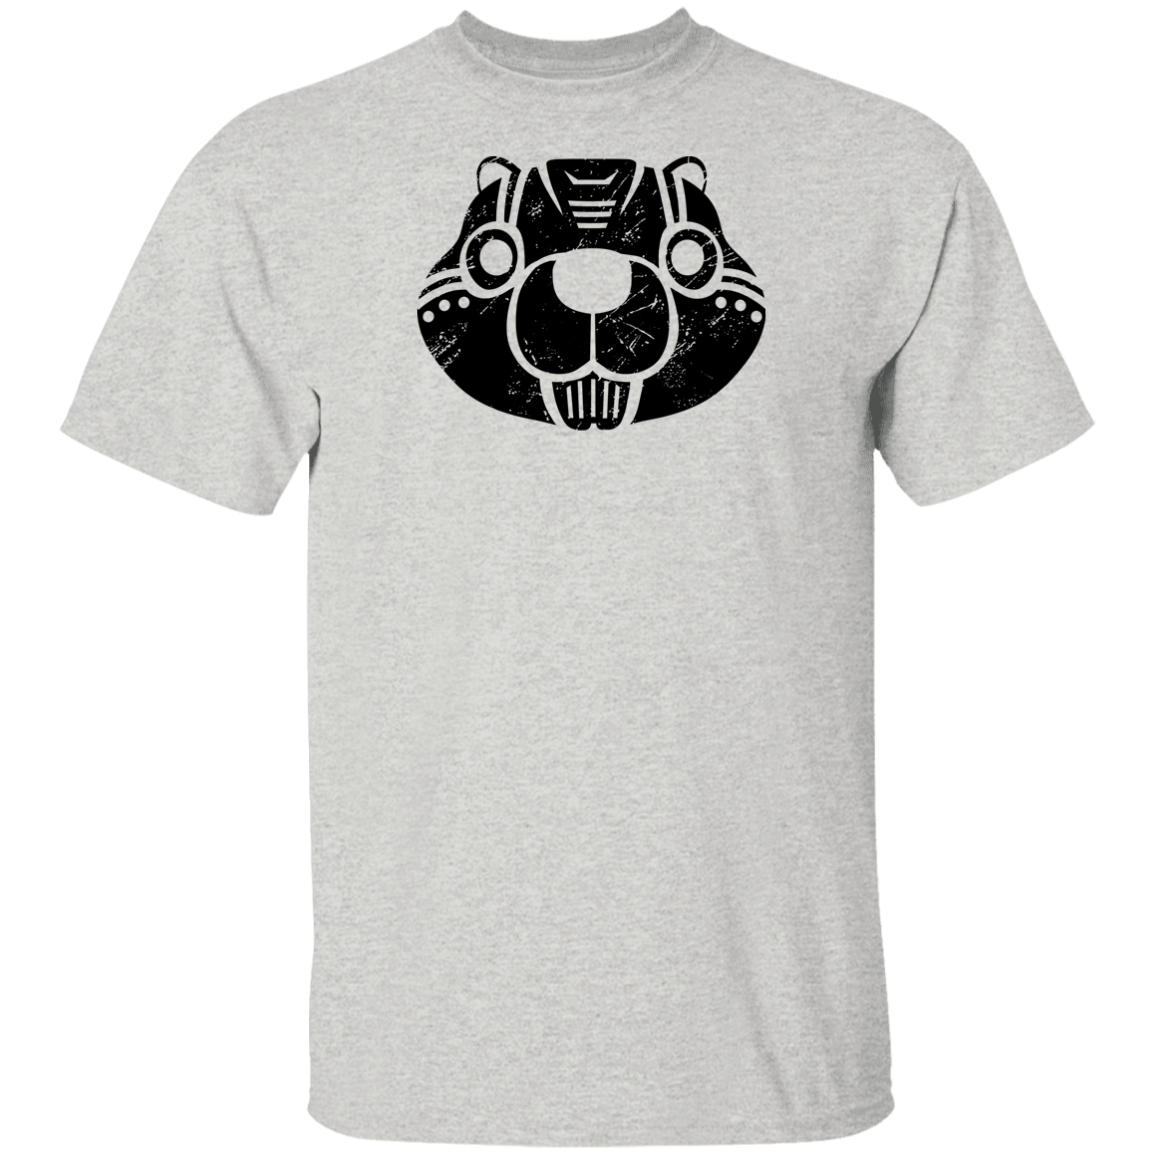 Black Distressed Emblem T-Shirt for Kids (Beaver/Buzzcut)